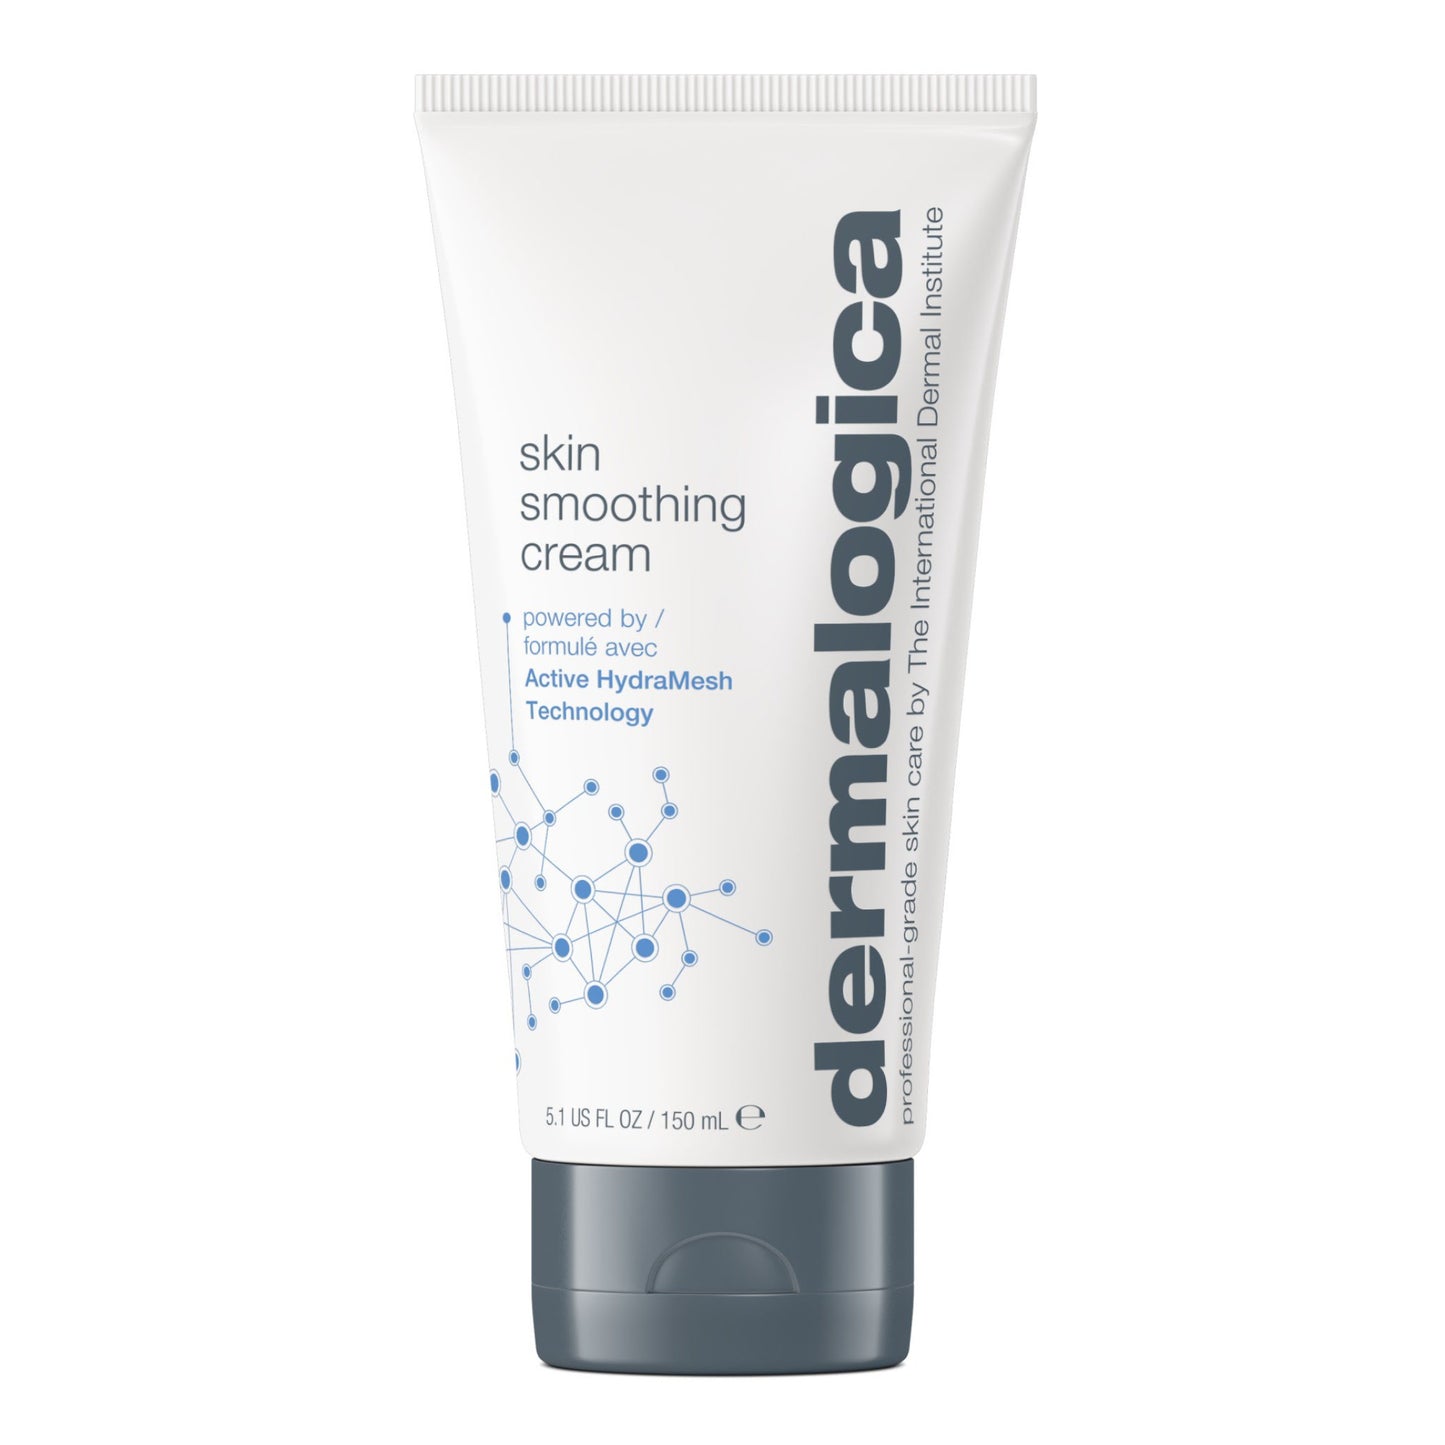 skin smoothing cream moisturizer jumbo